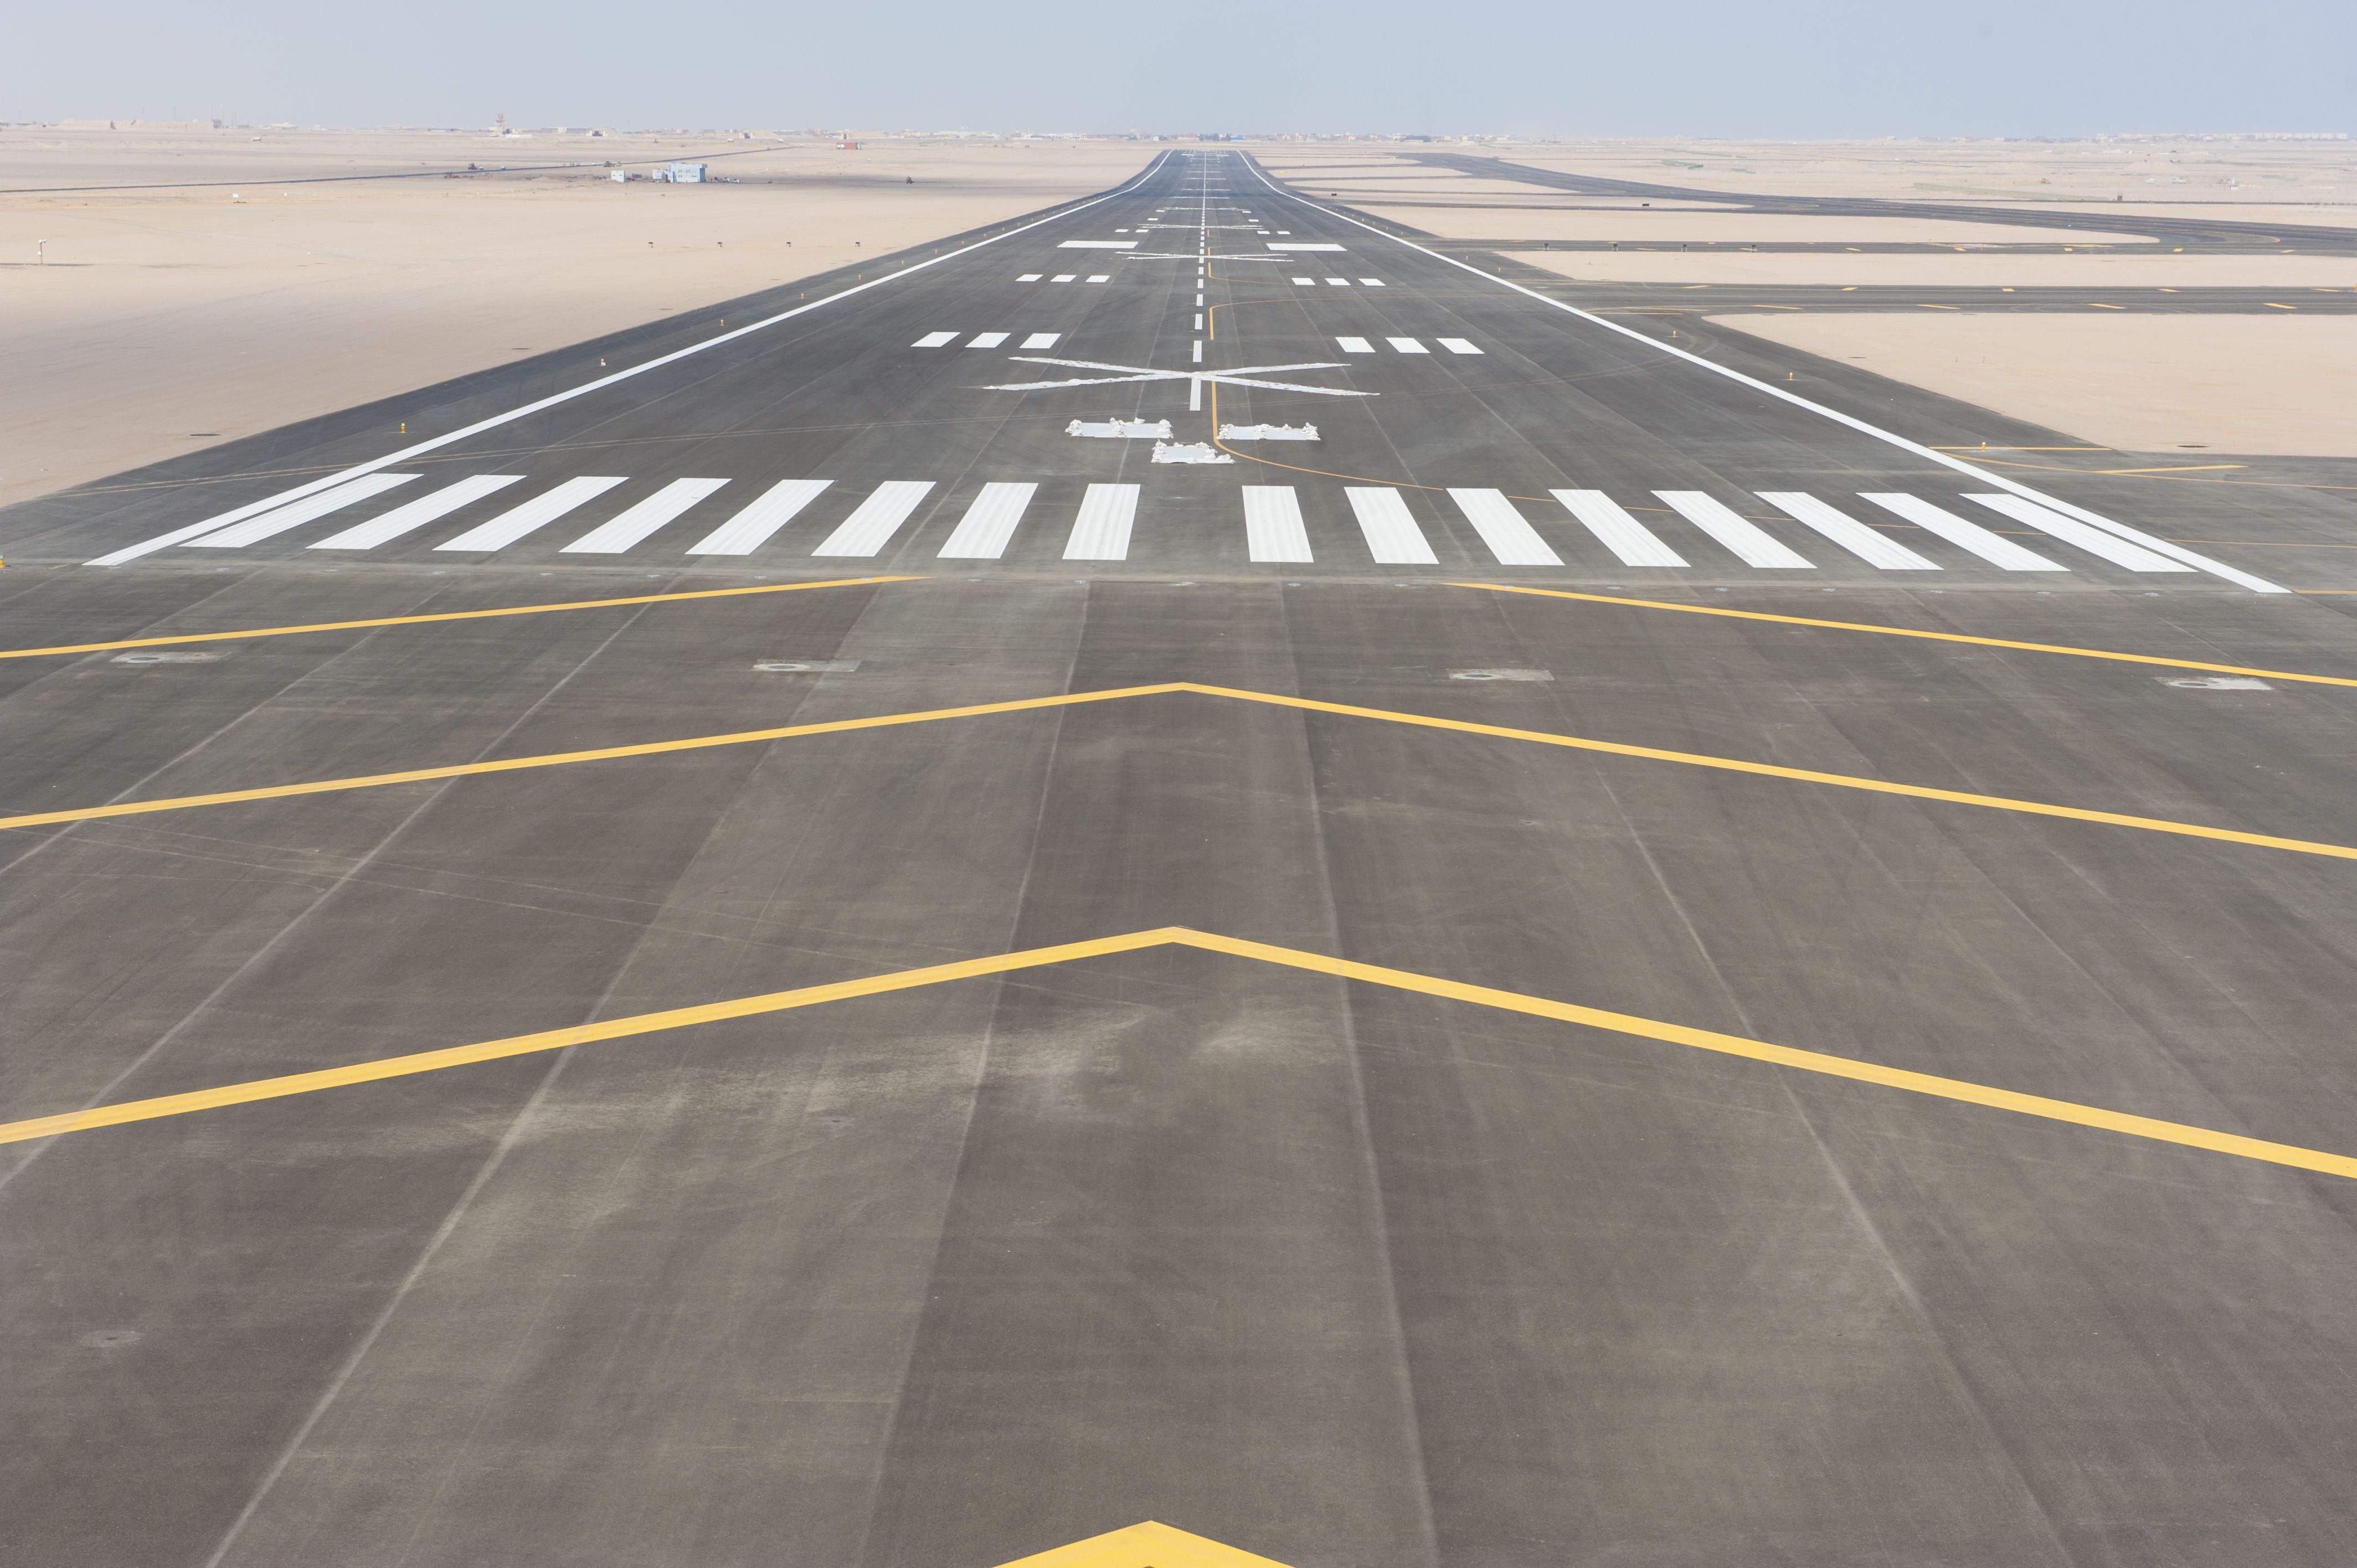 Commercial airport runway